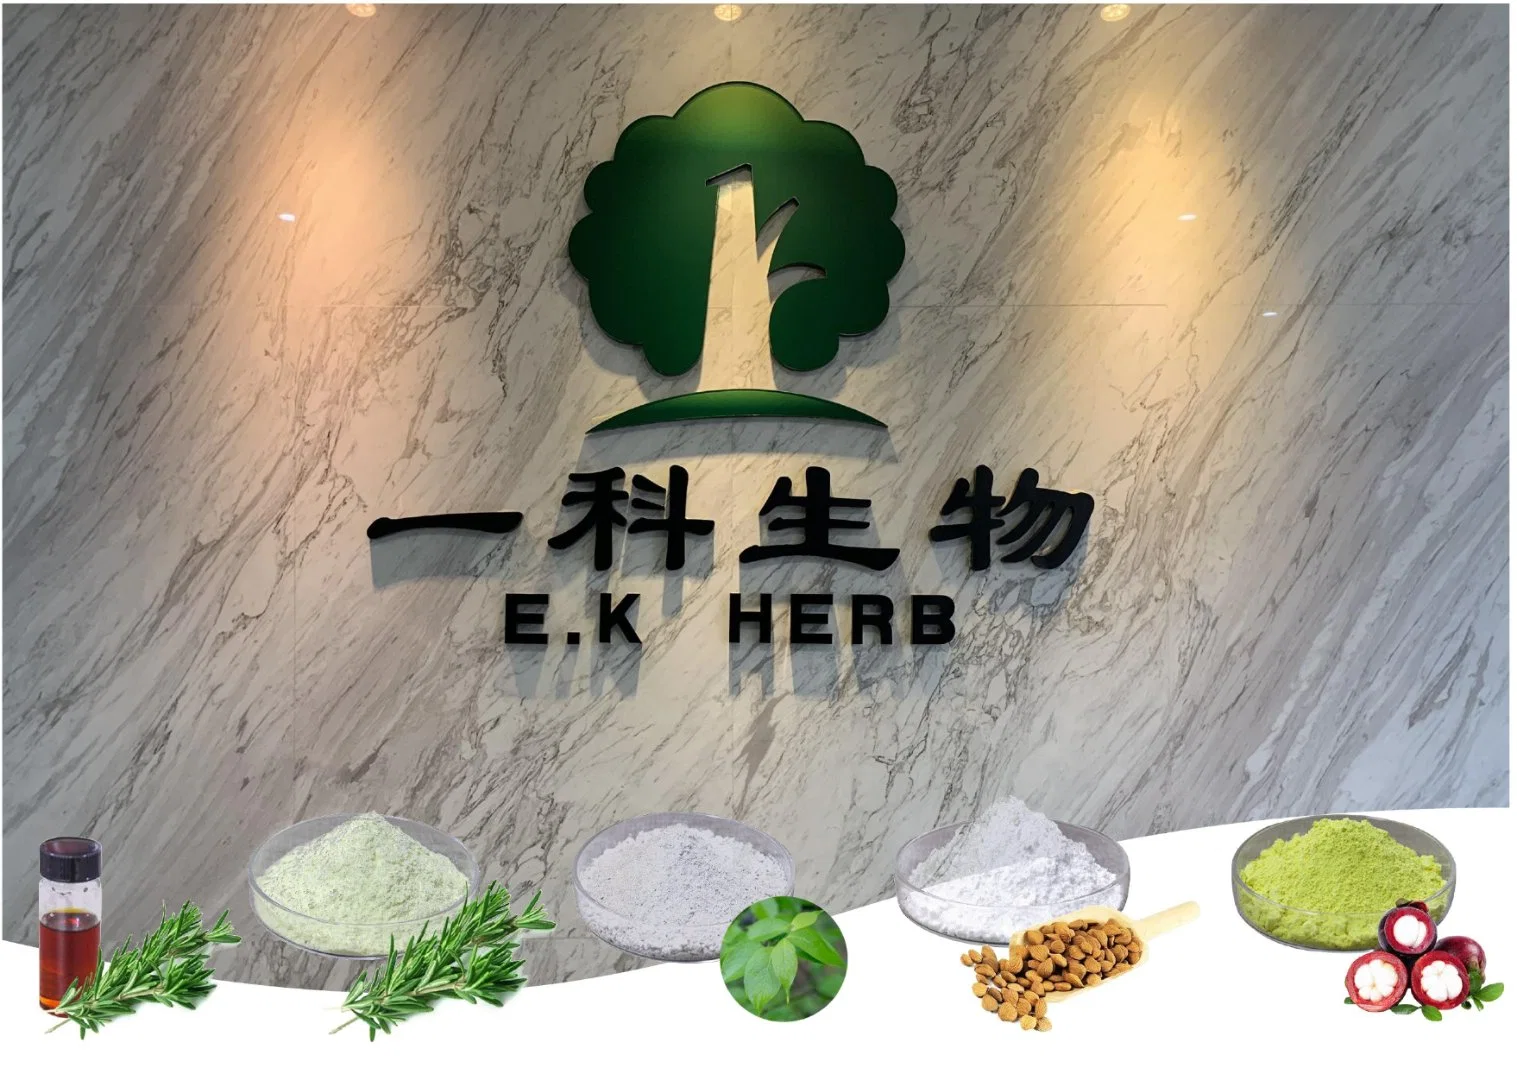 E. K Herb 100% Natural Plant Extract Tomato Fruit Extract Lycopene 98% Anti-Aging and Enhancing Immunity Tomato Fruit Extract